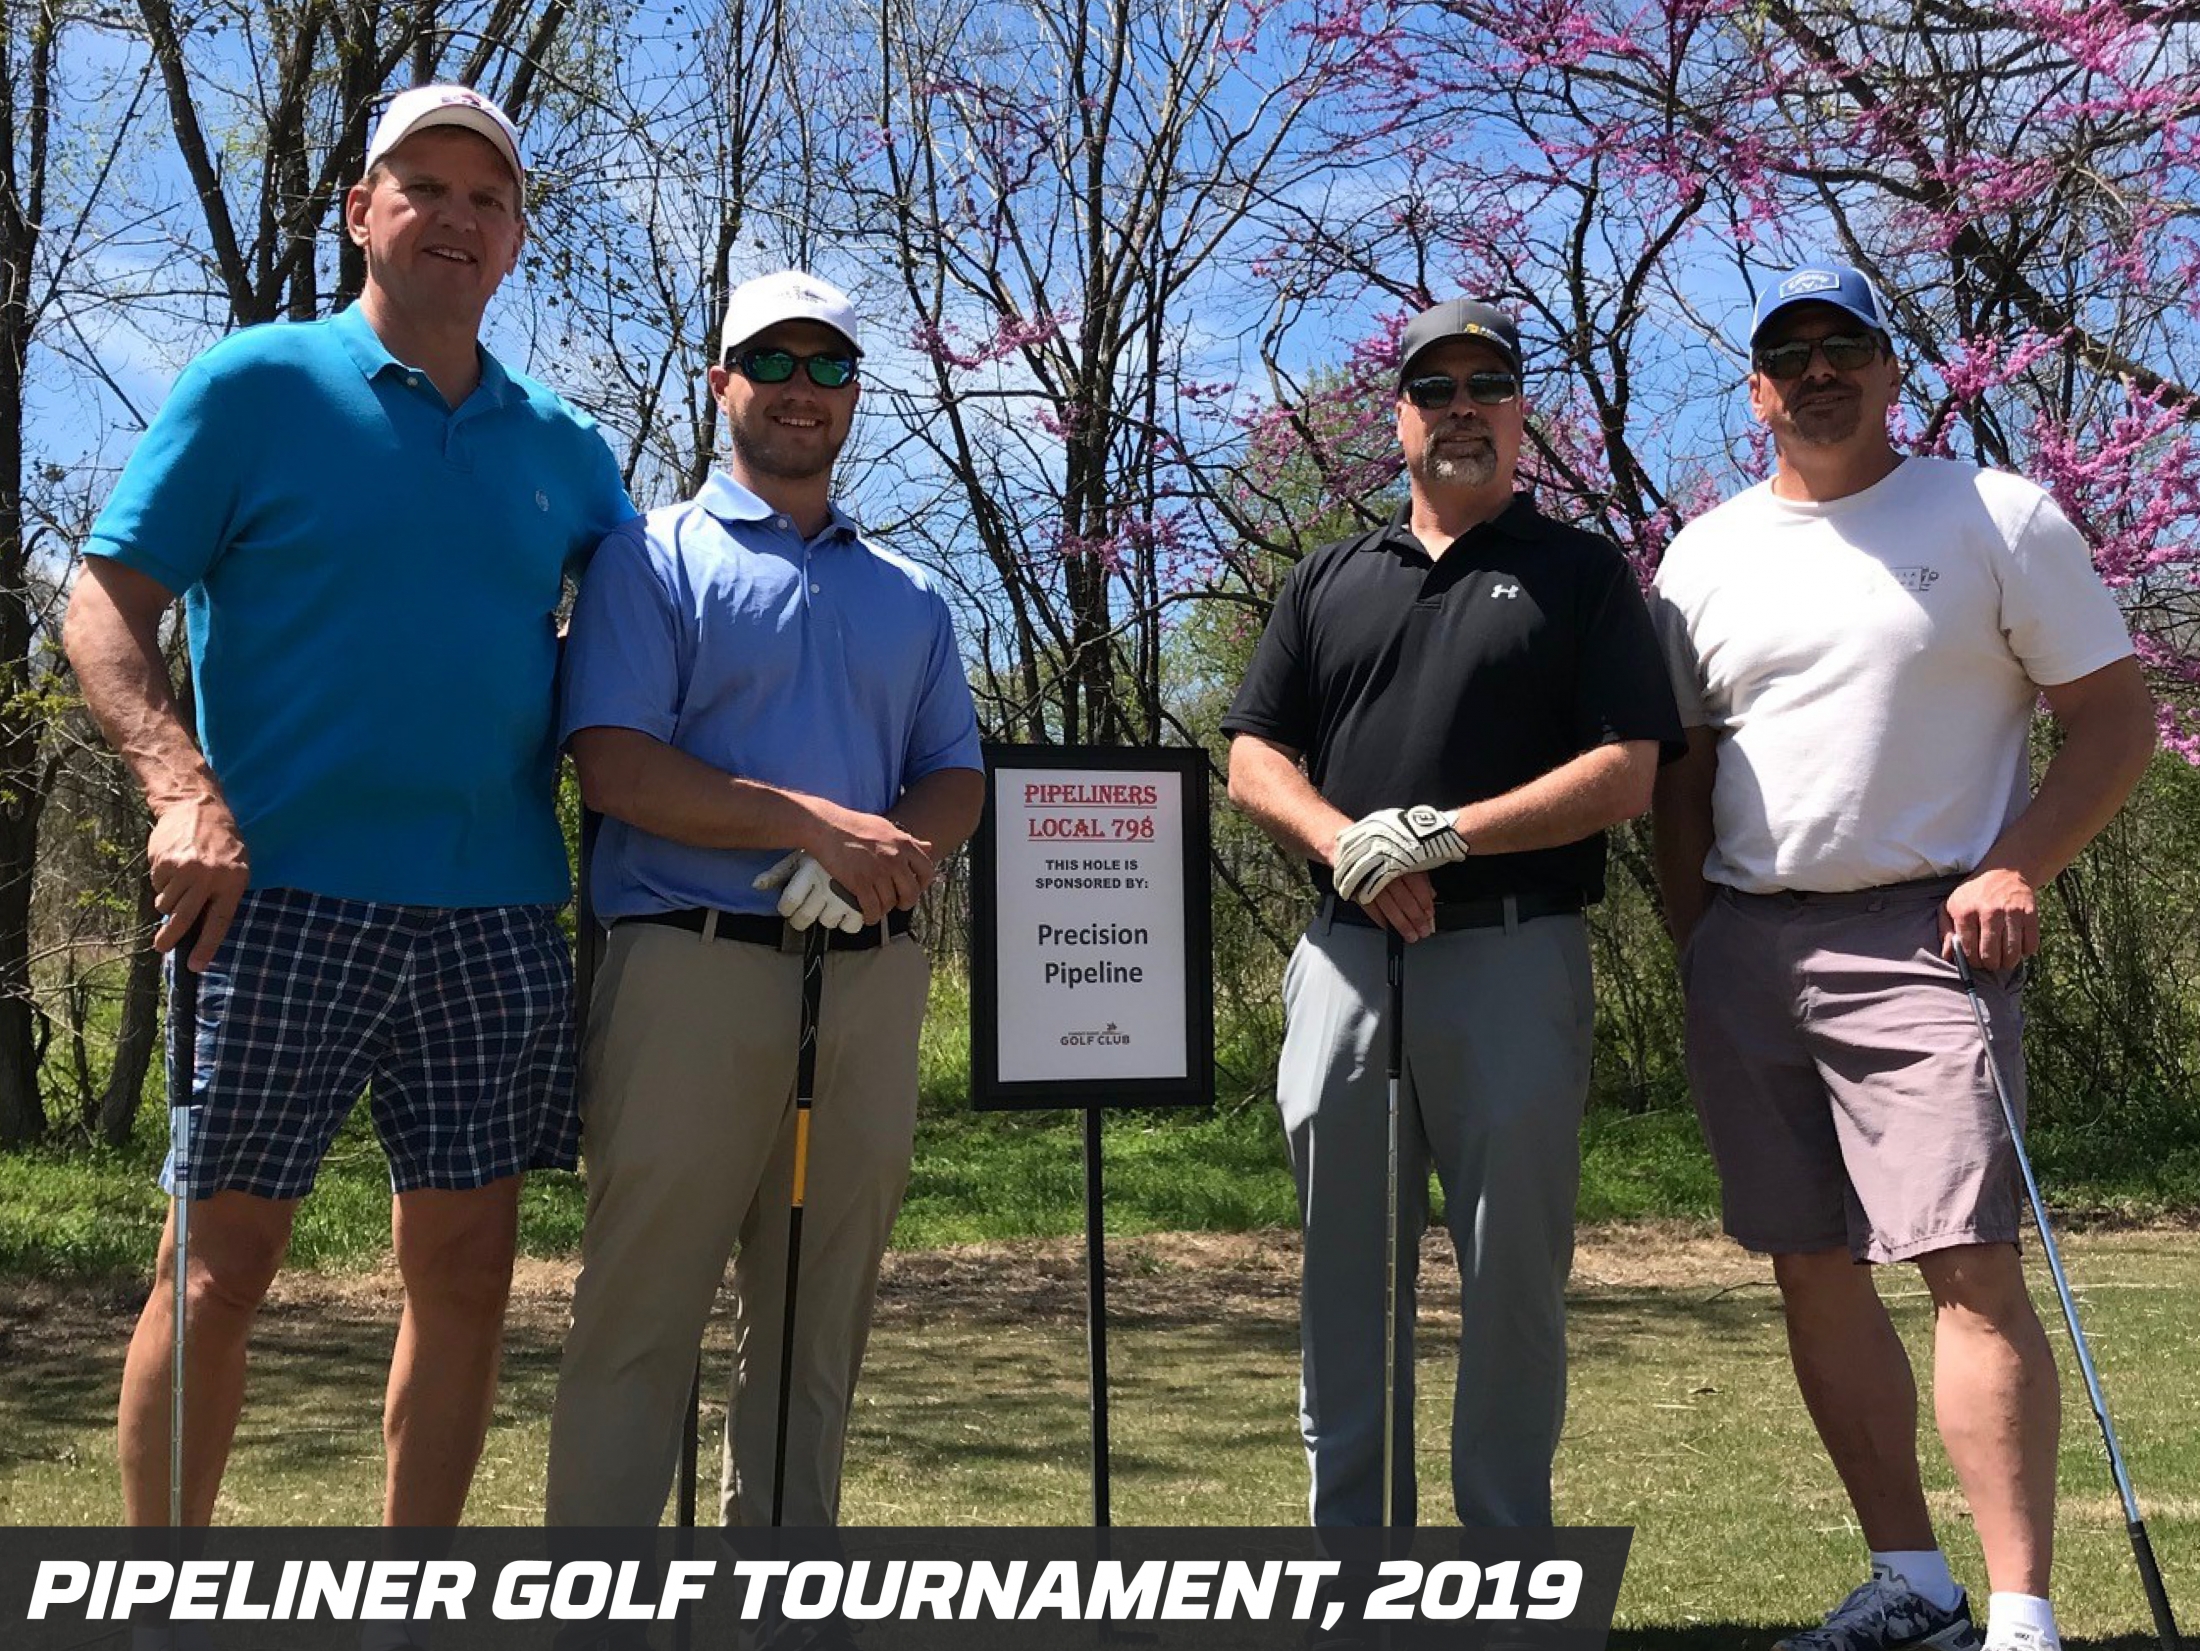 Precision Pipeline Community Involvement: Pipleiner Golf Tournament, 2019